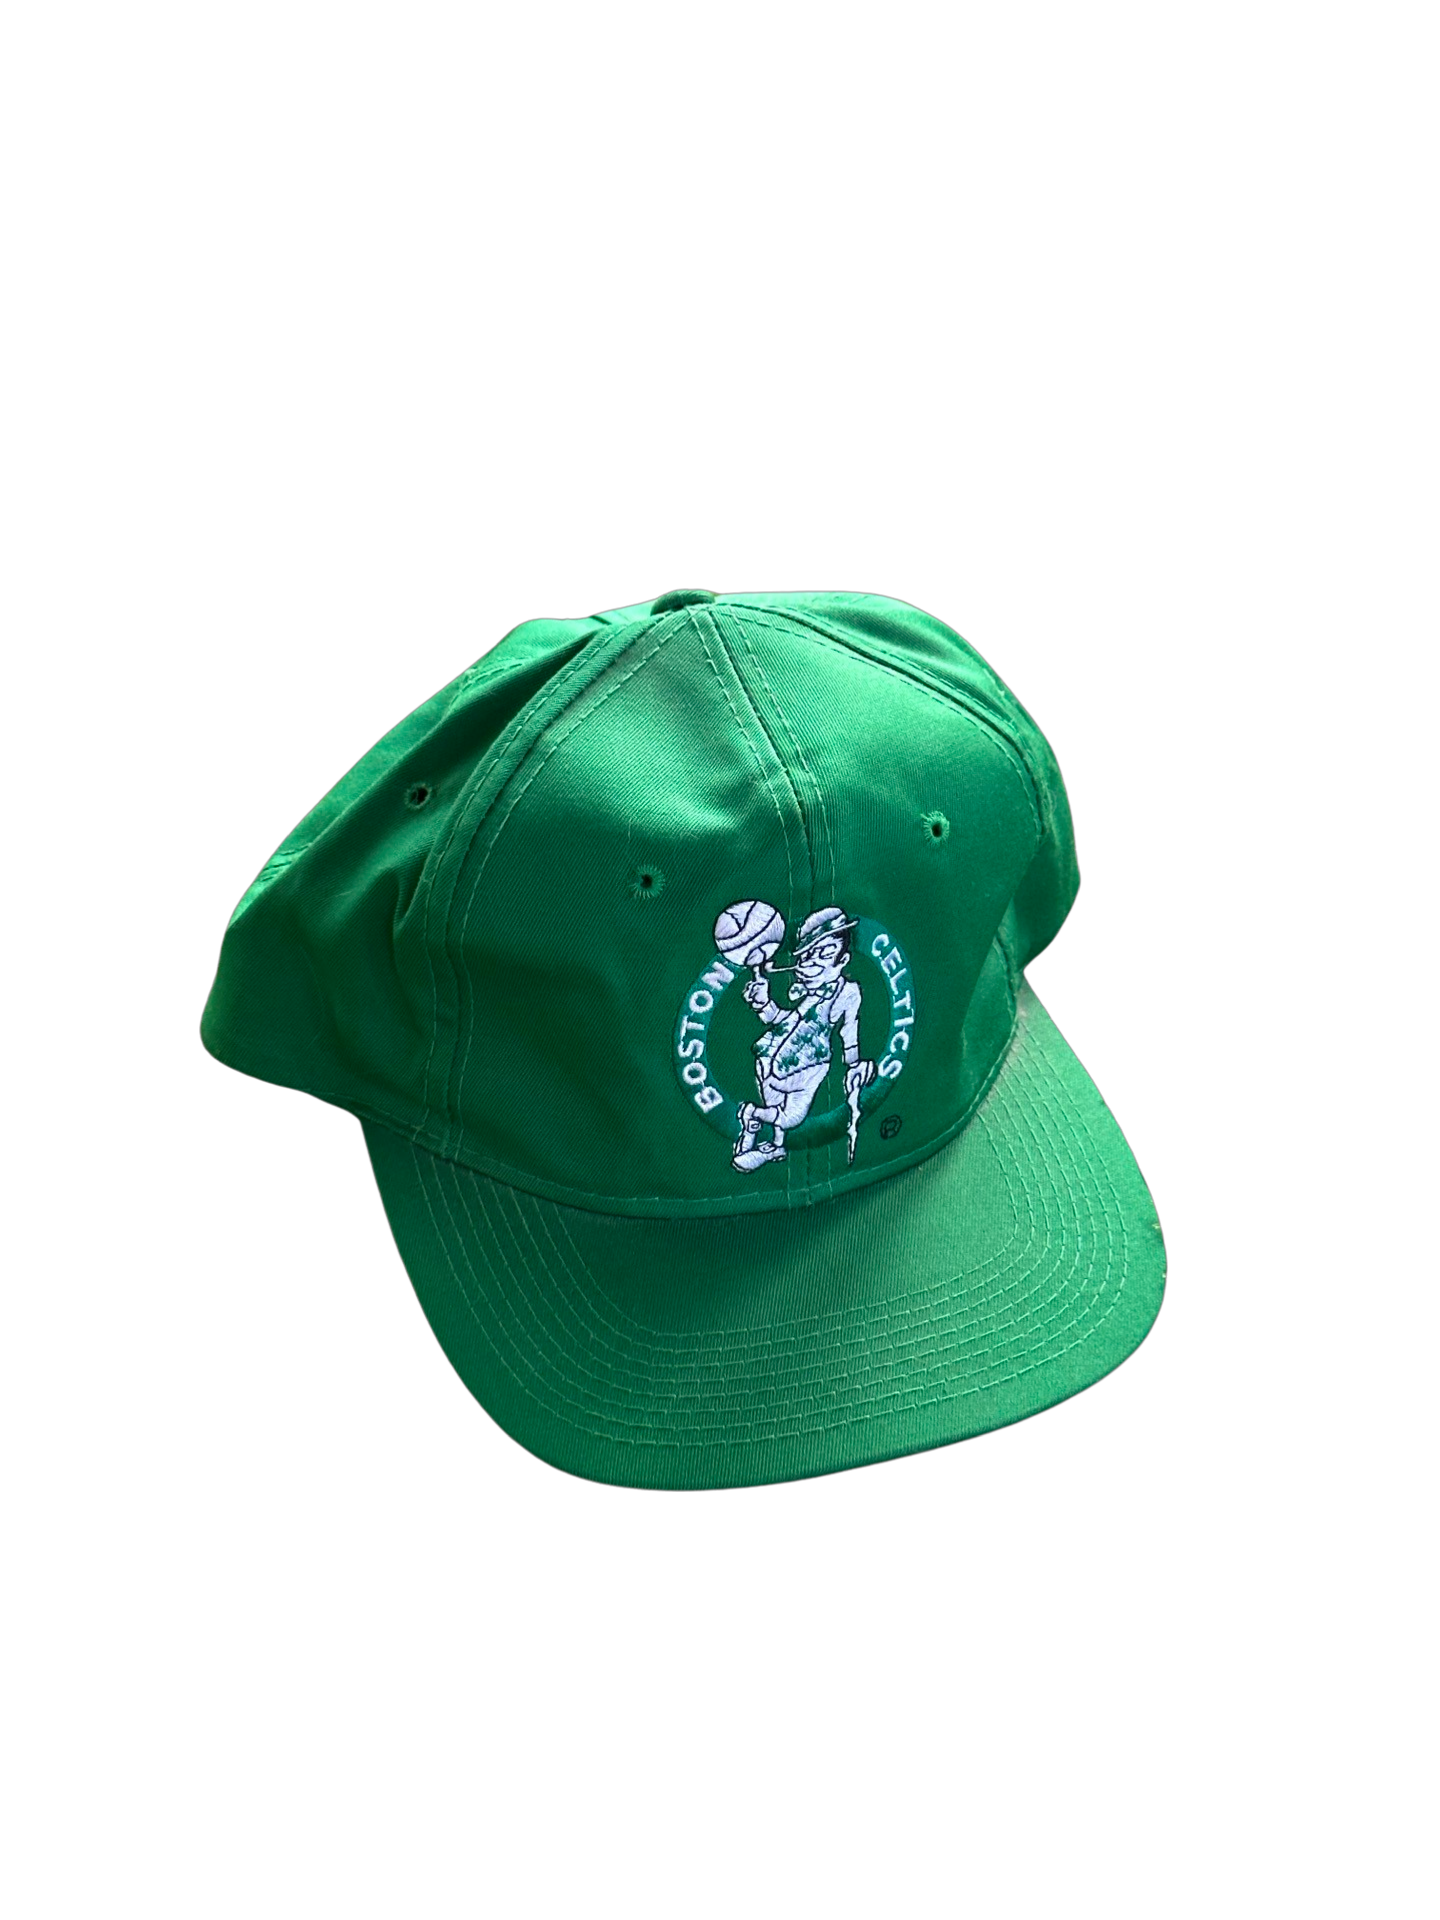 Vintage Celtics Hat